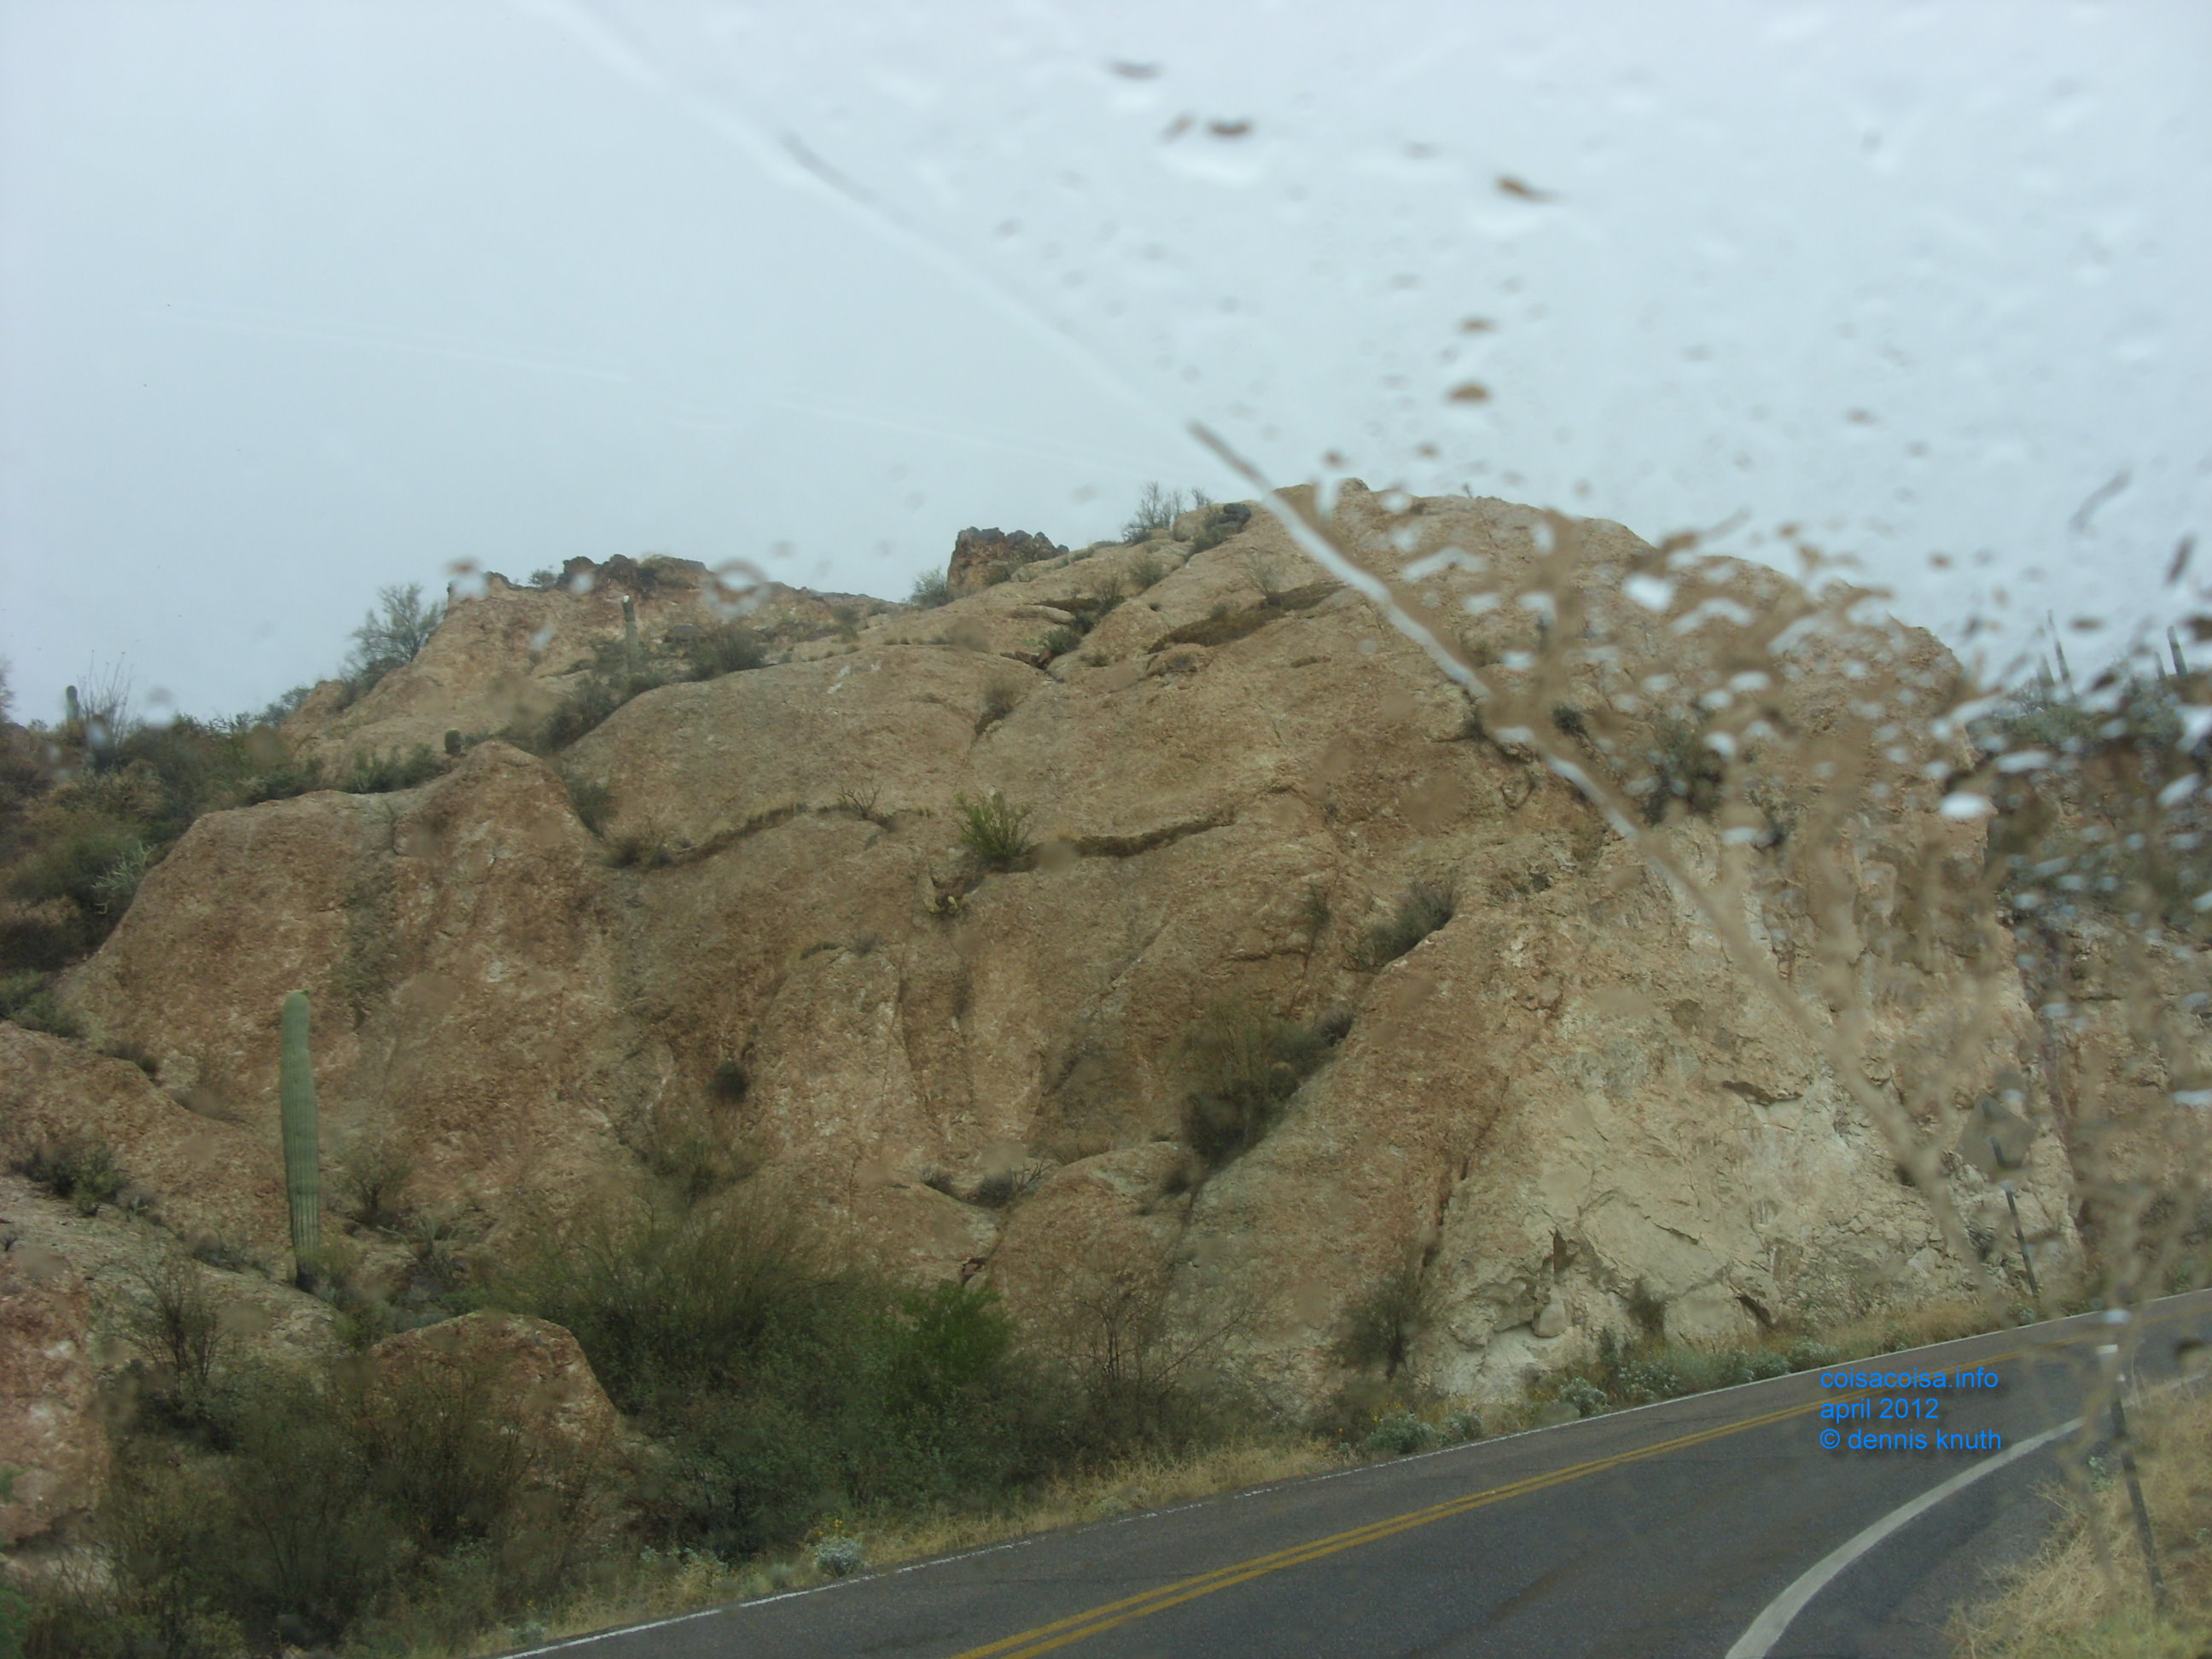 Window rain drops and desert boulders